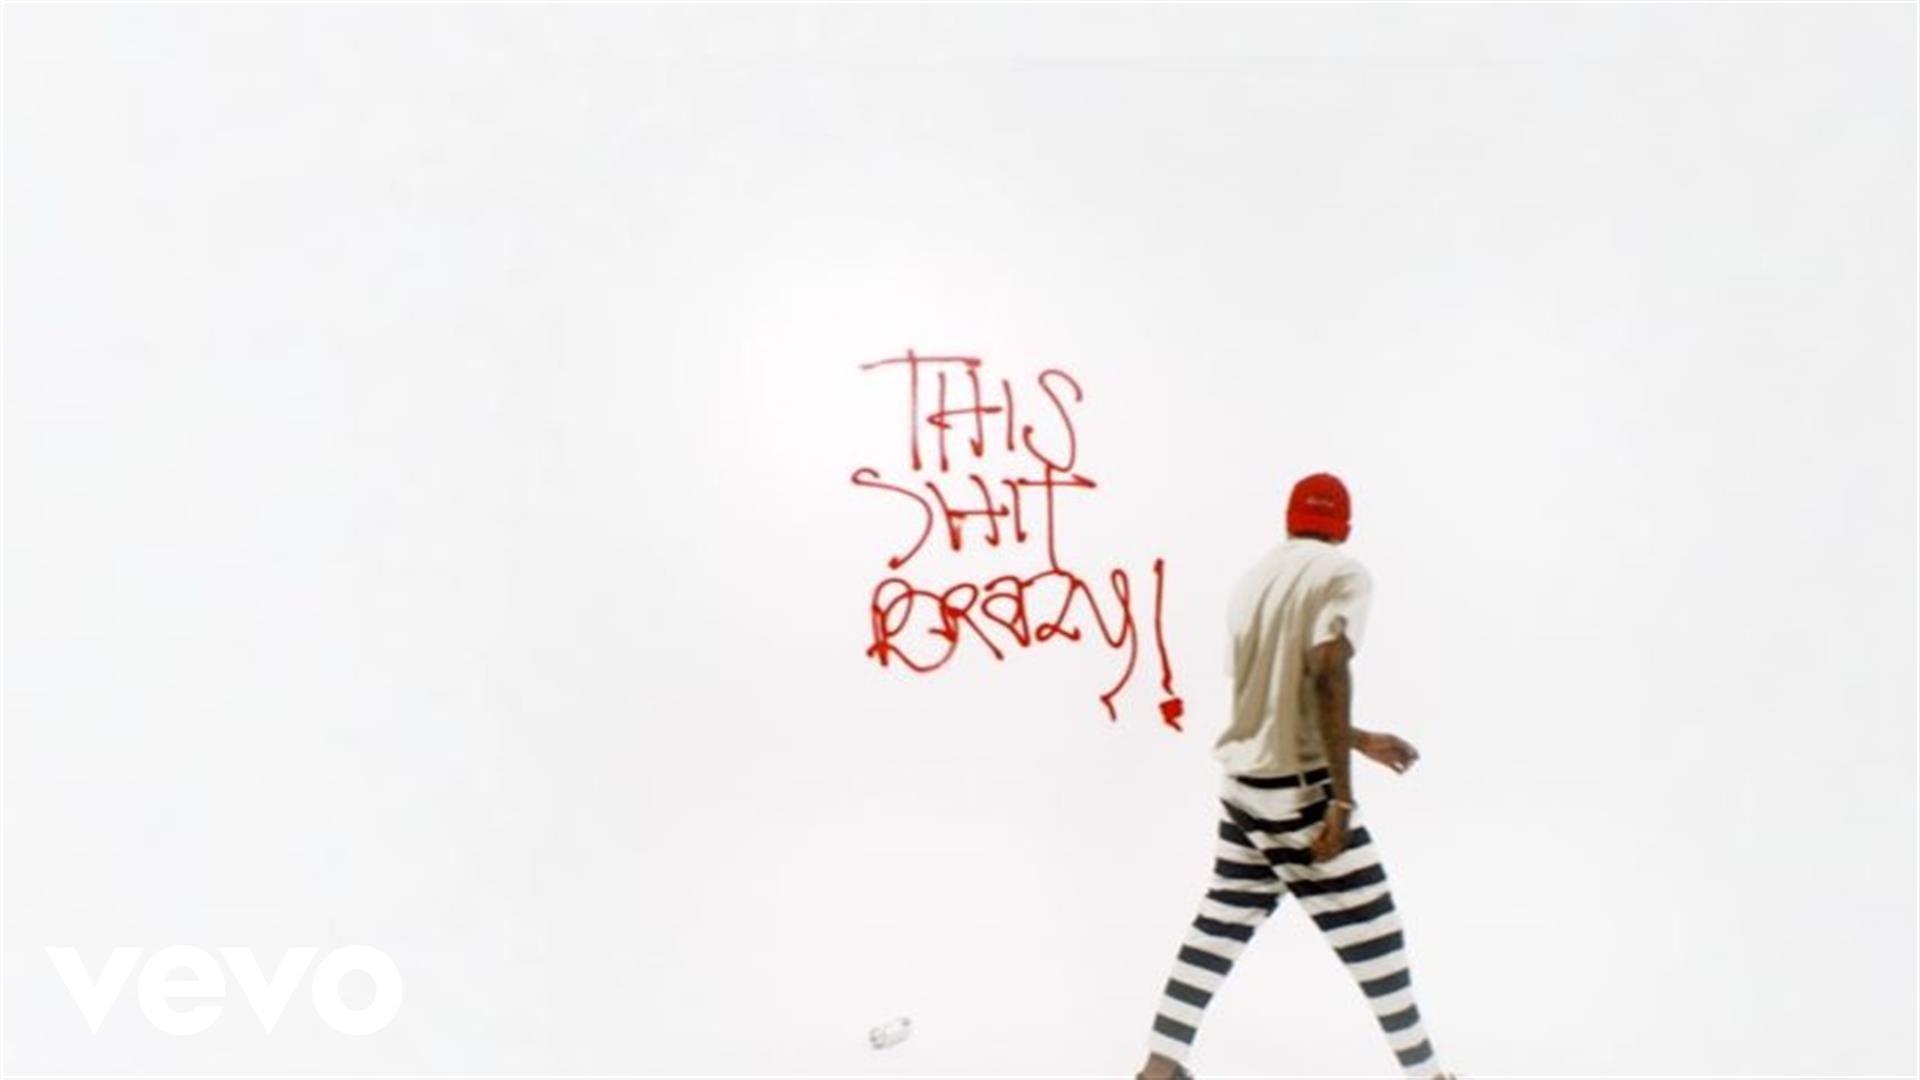 7 Iphone wallpapers ideas  yg rapper rapper style yg 4hunnid